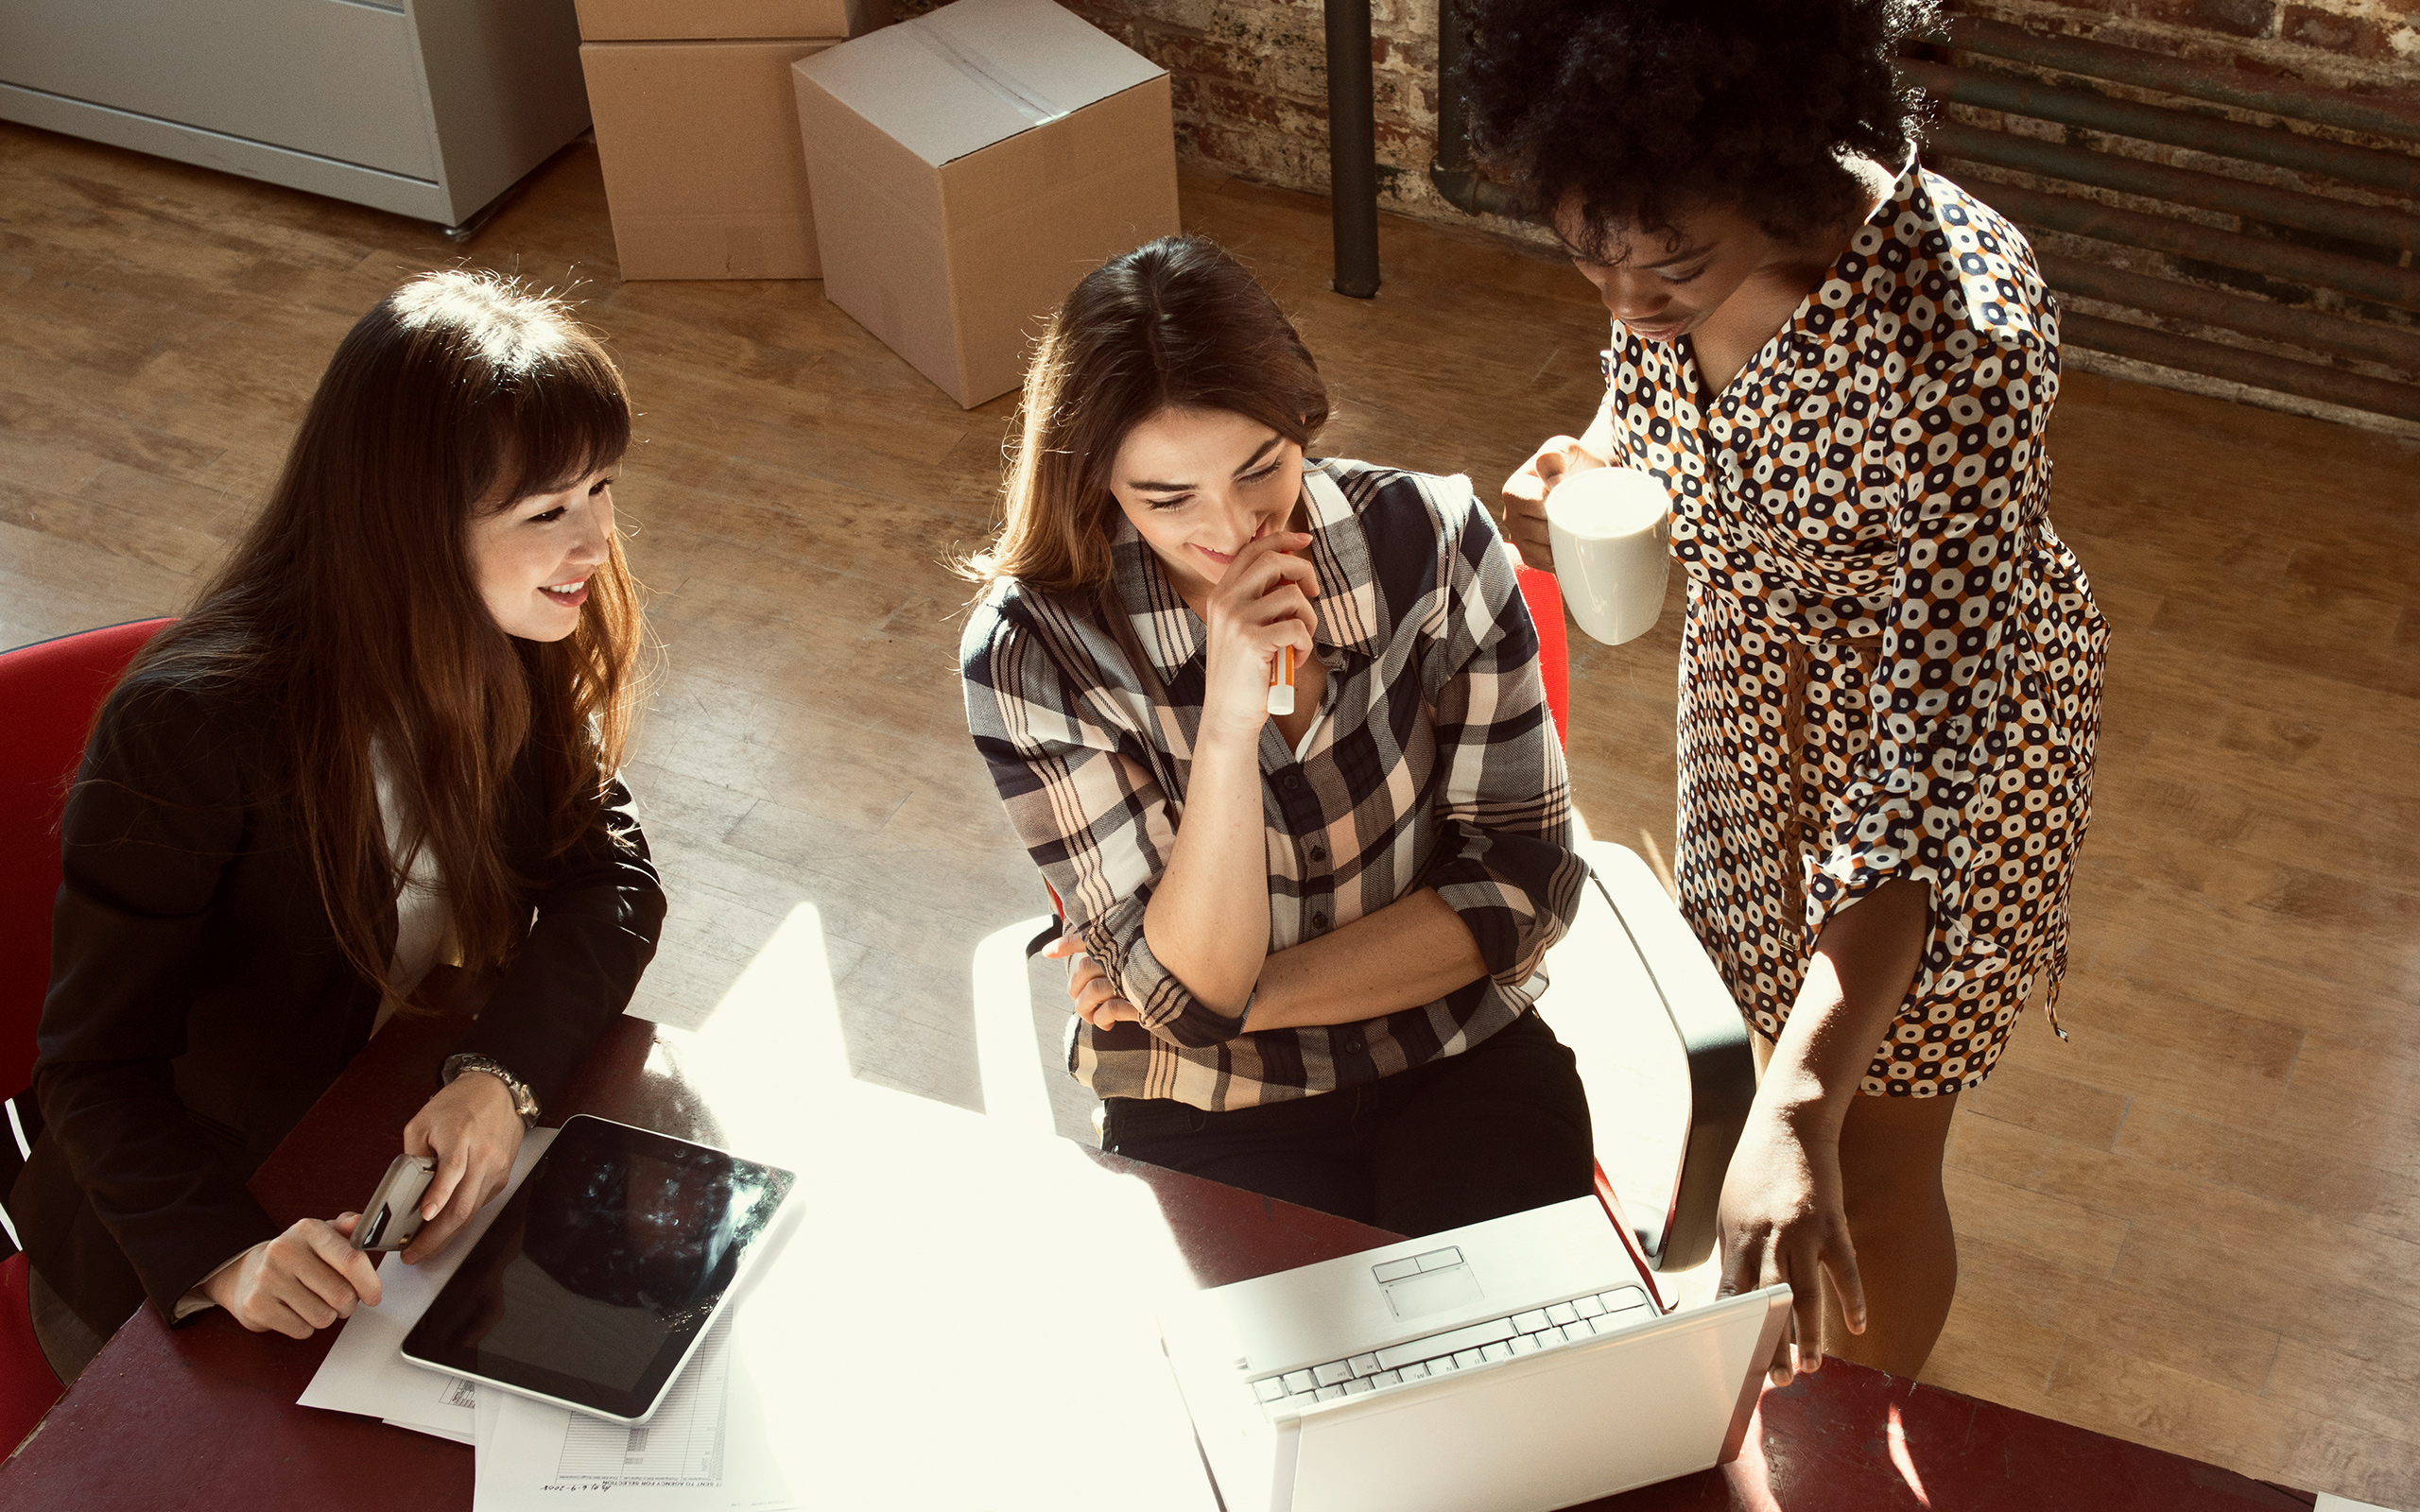 Three women share business leadership tips